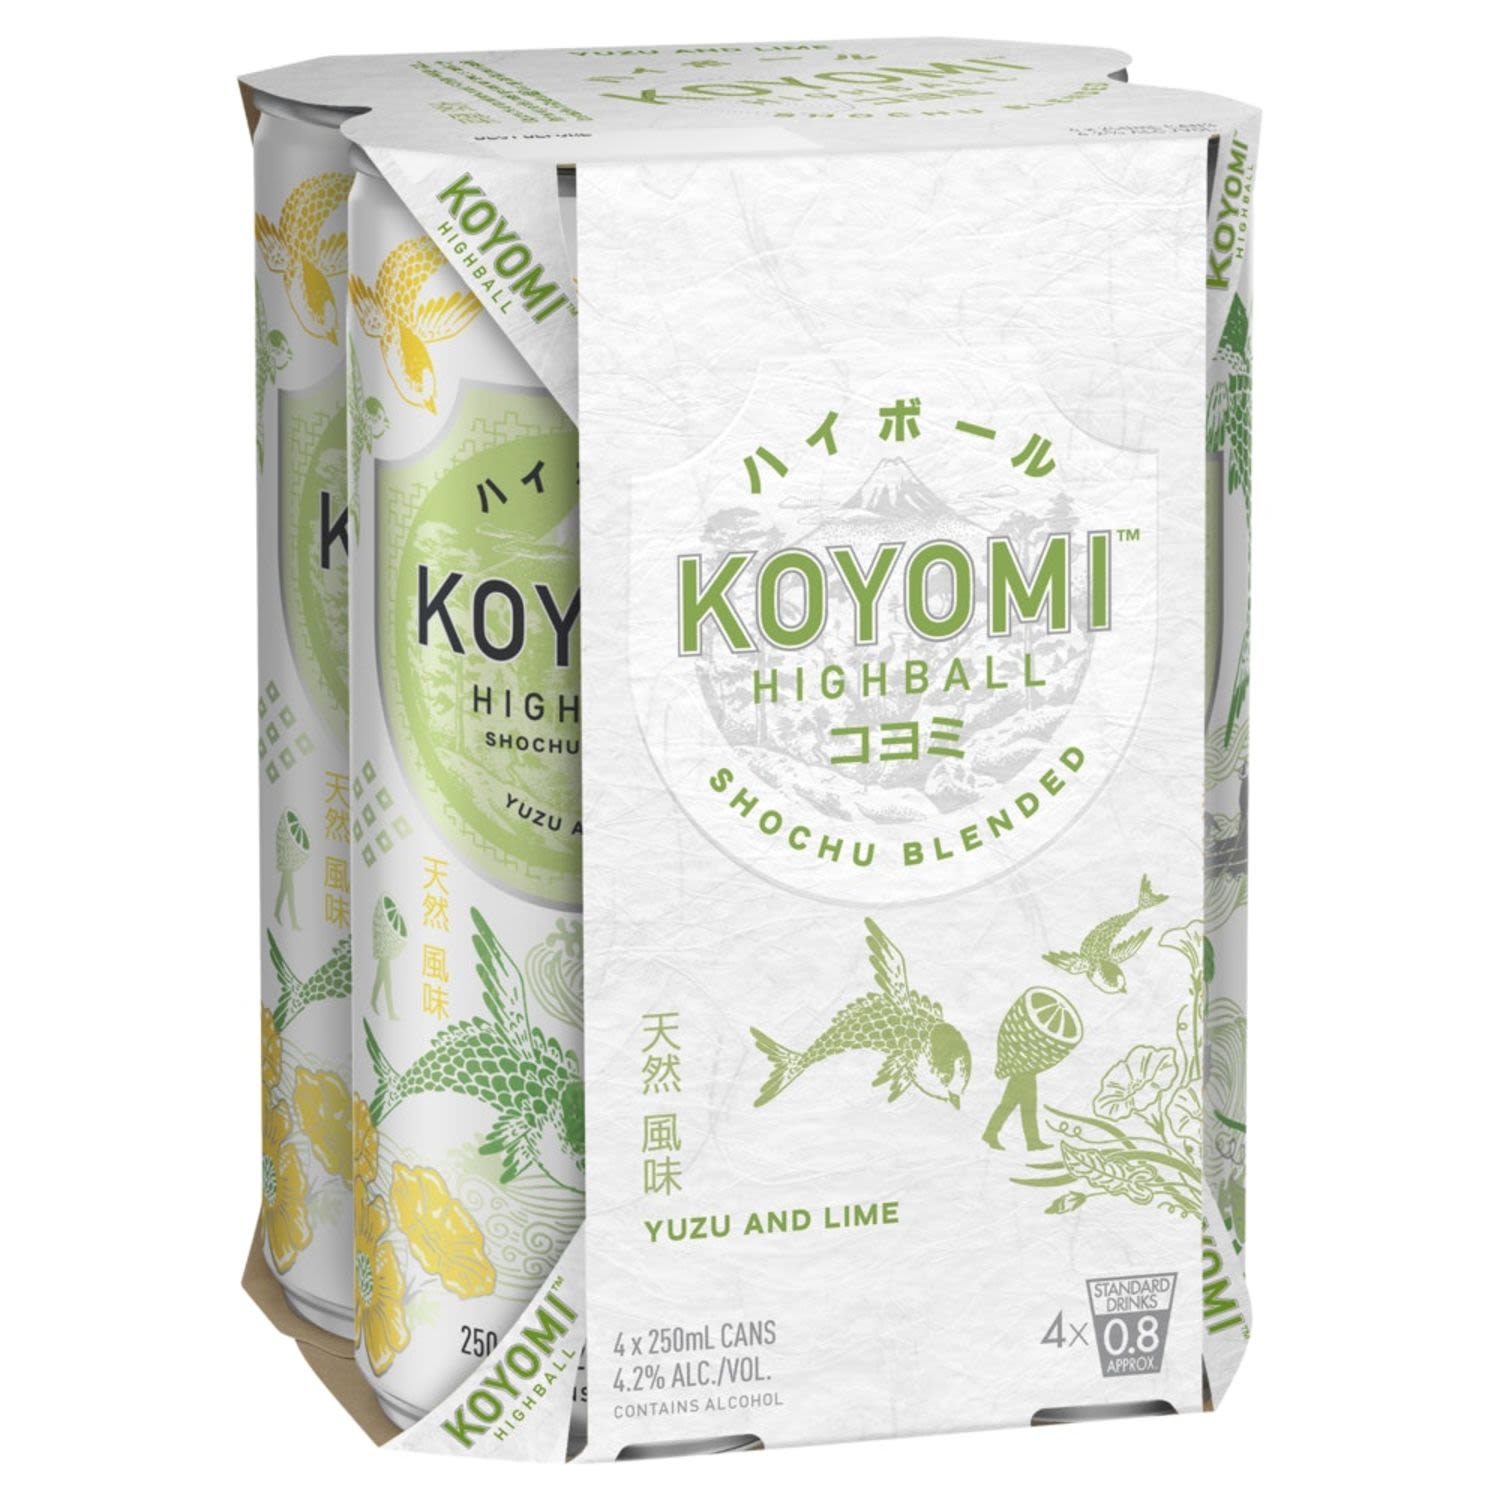 Koyomi Shochu Blended Yuzu and Lime Highball 250mL<br /> <br />Alcohol Volume: 4.20%<br /><br />Pack Format: 4 Pack<br /><br />Standard Drinks: 0.8</br /><br />Pack Type: Can<br />